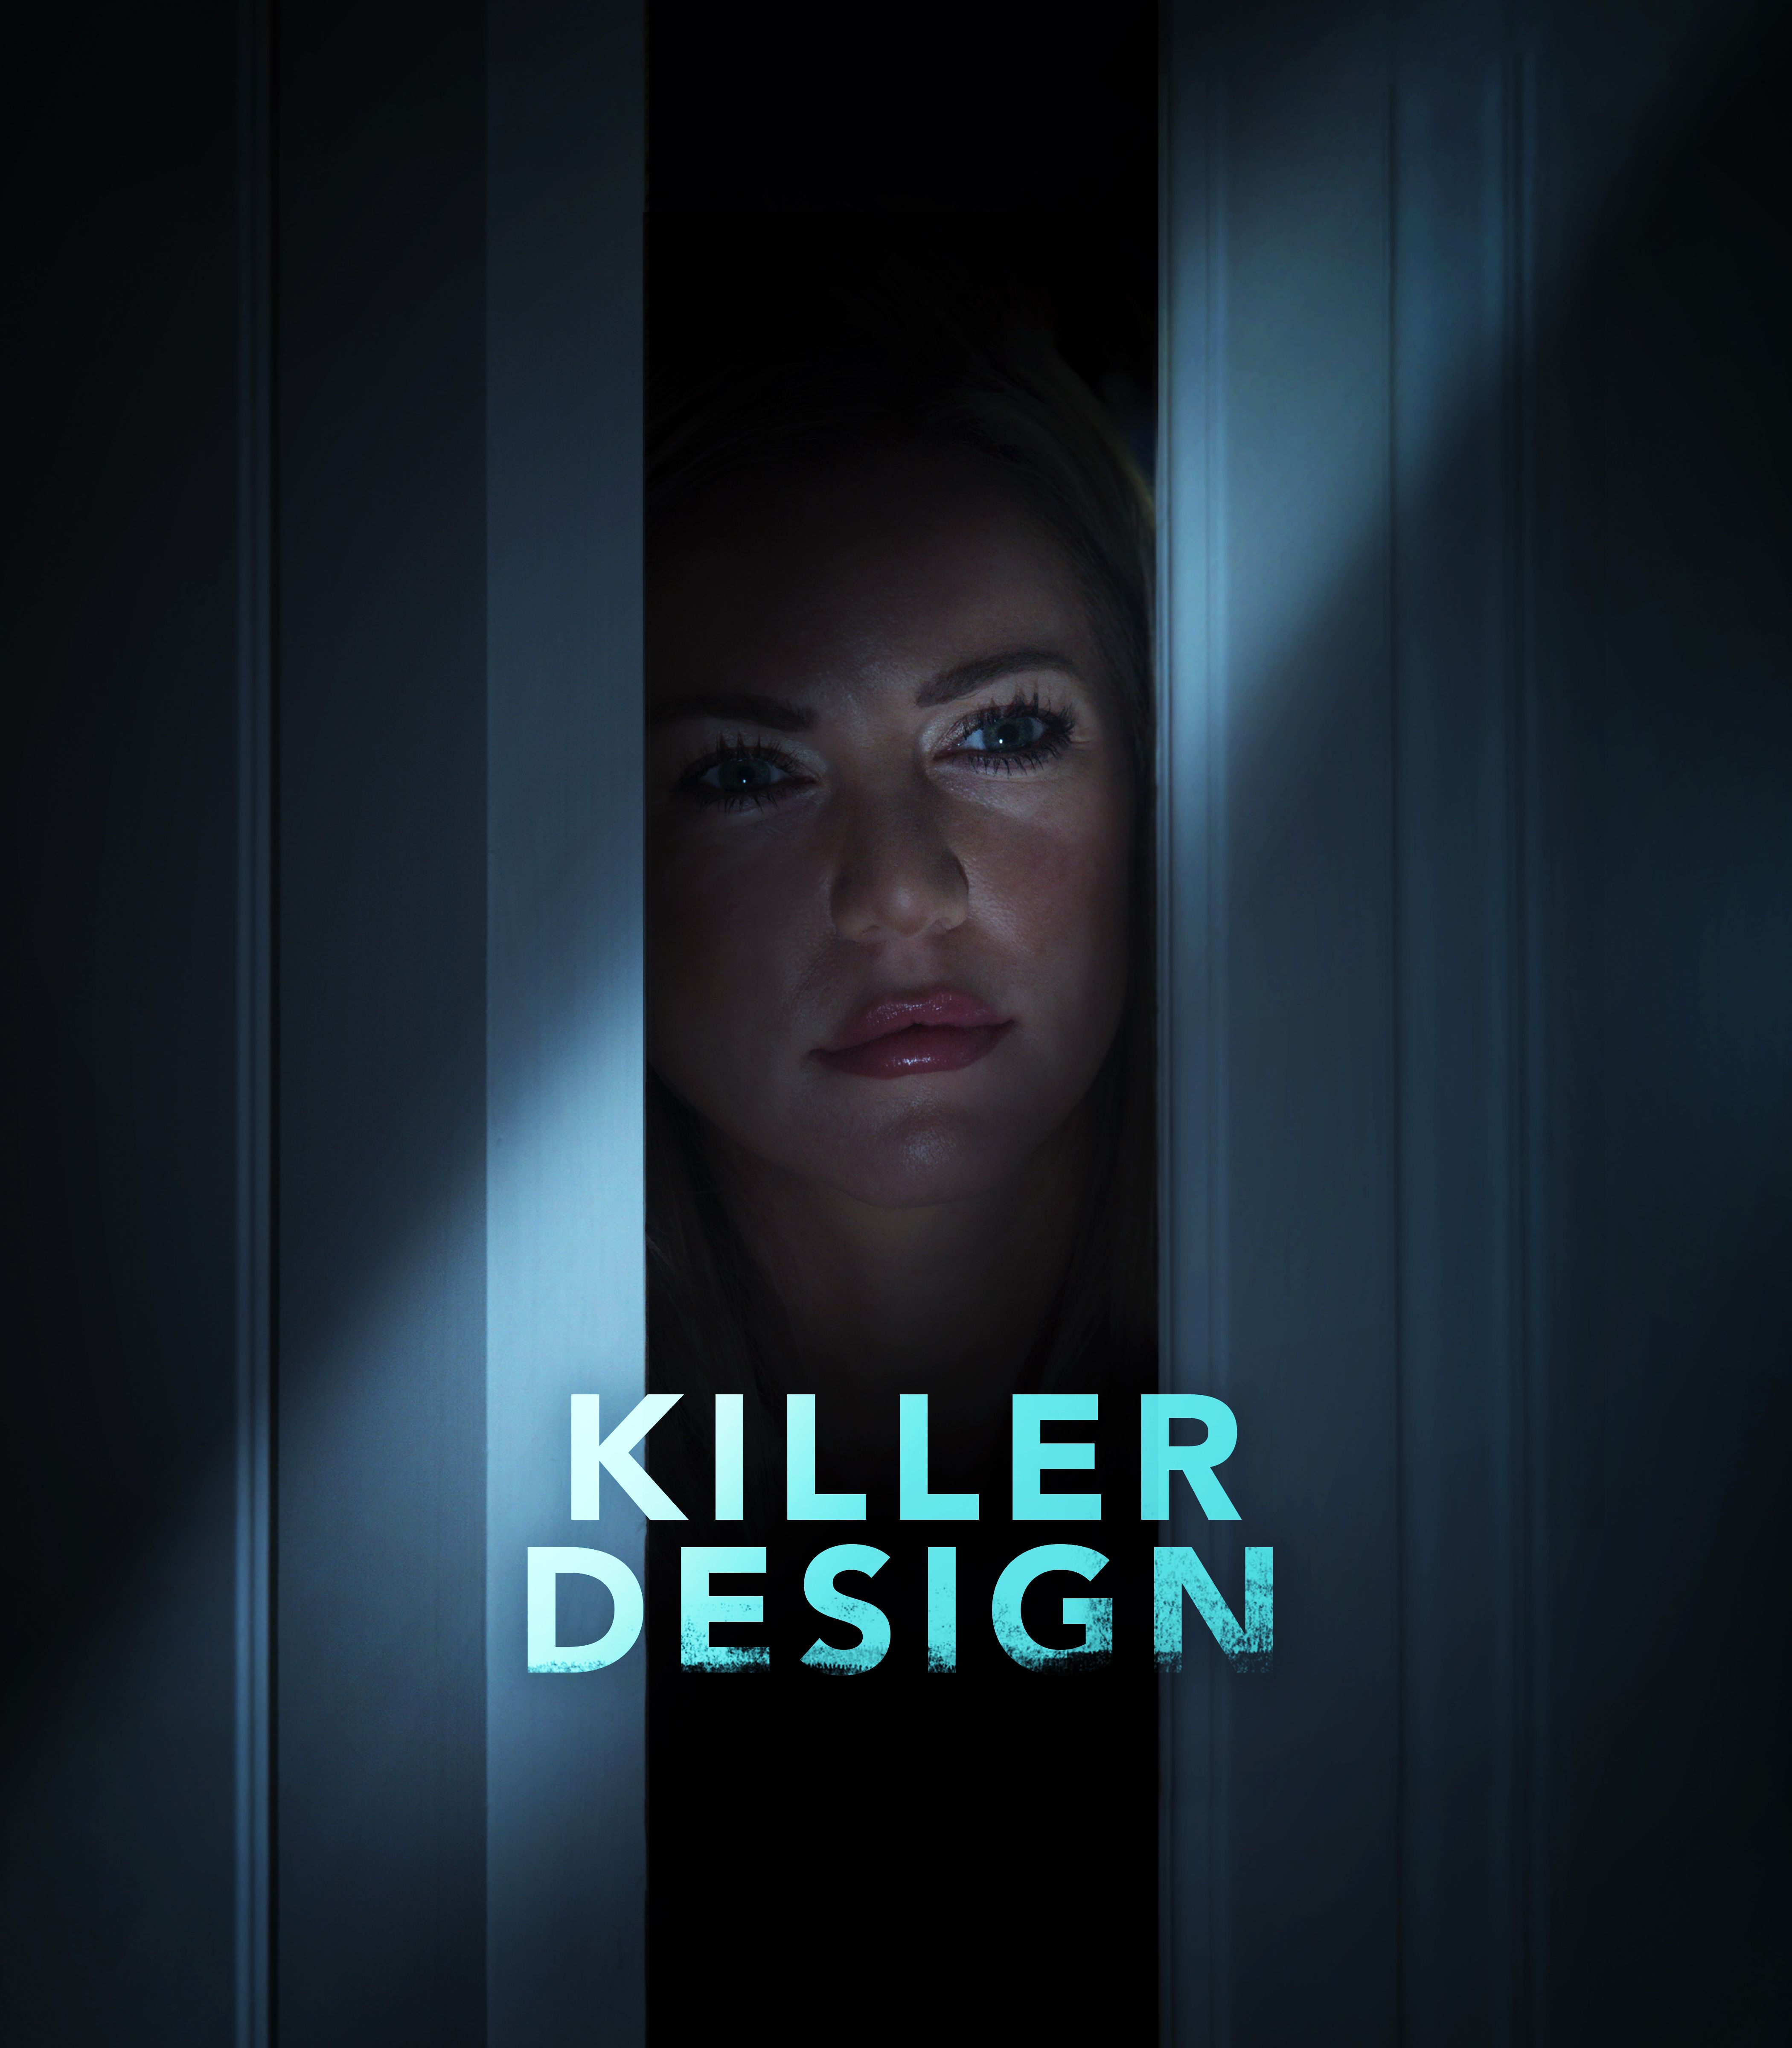 Killer Design (2022) English HDRip download full movie